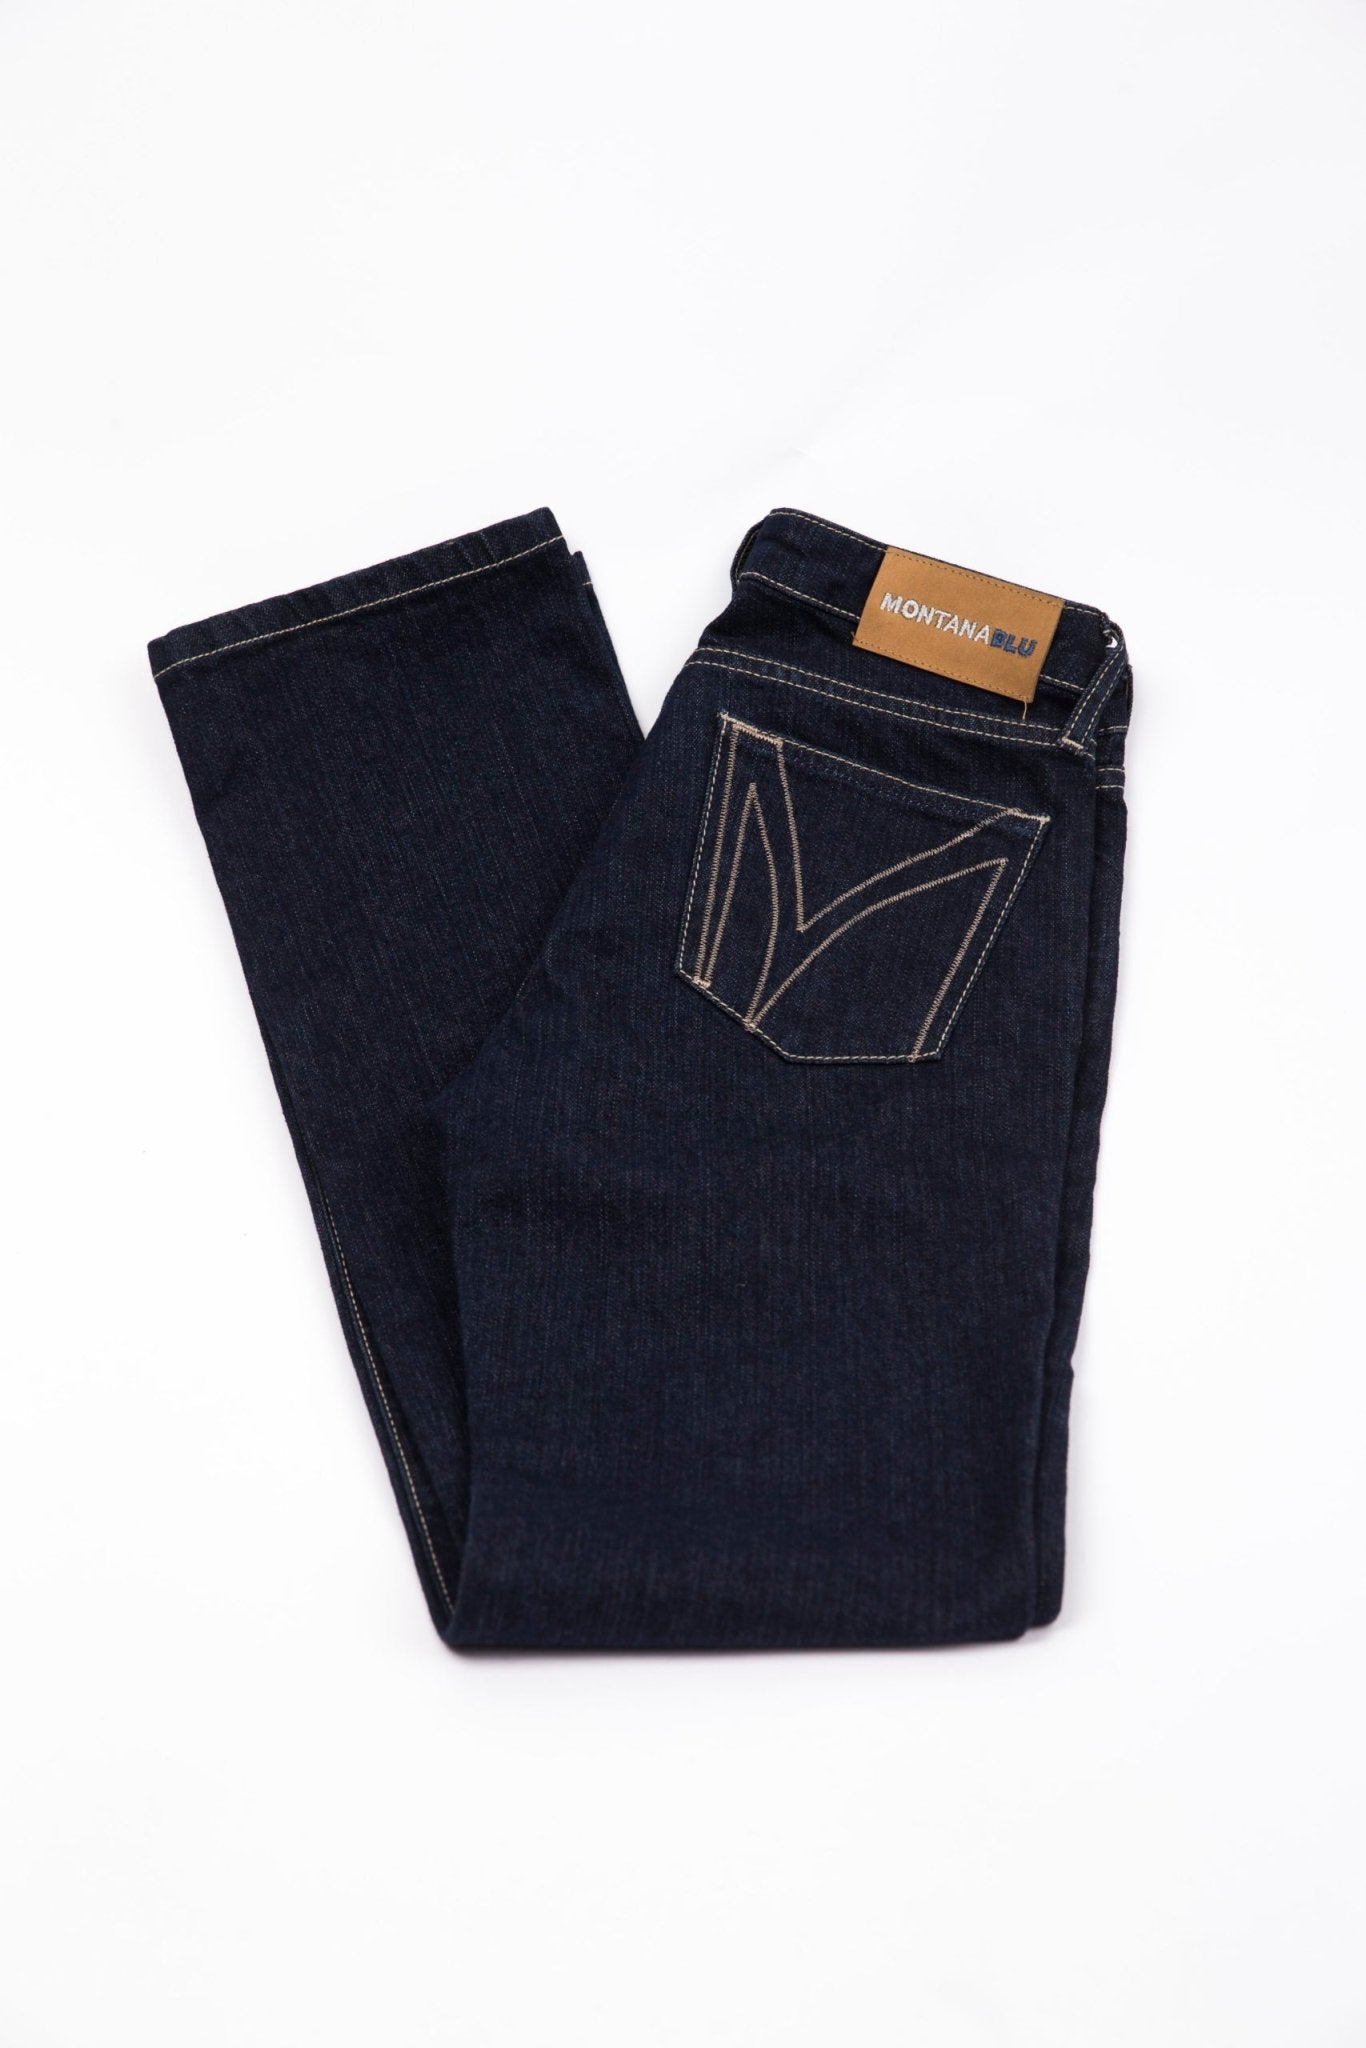 Montana Blu Blue Cotton Jeans & Pant - Fizigo